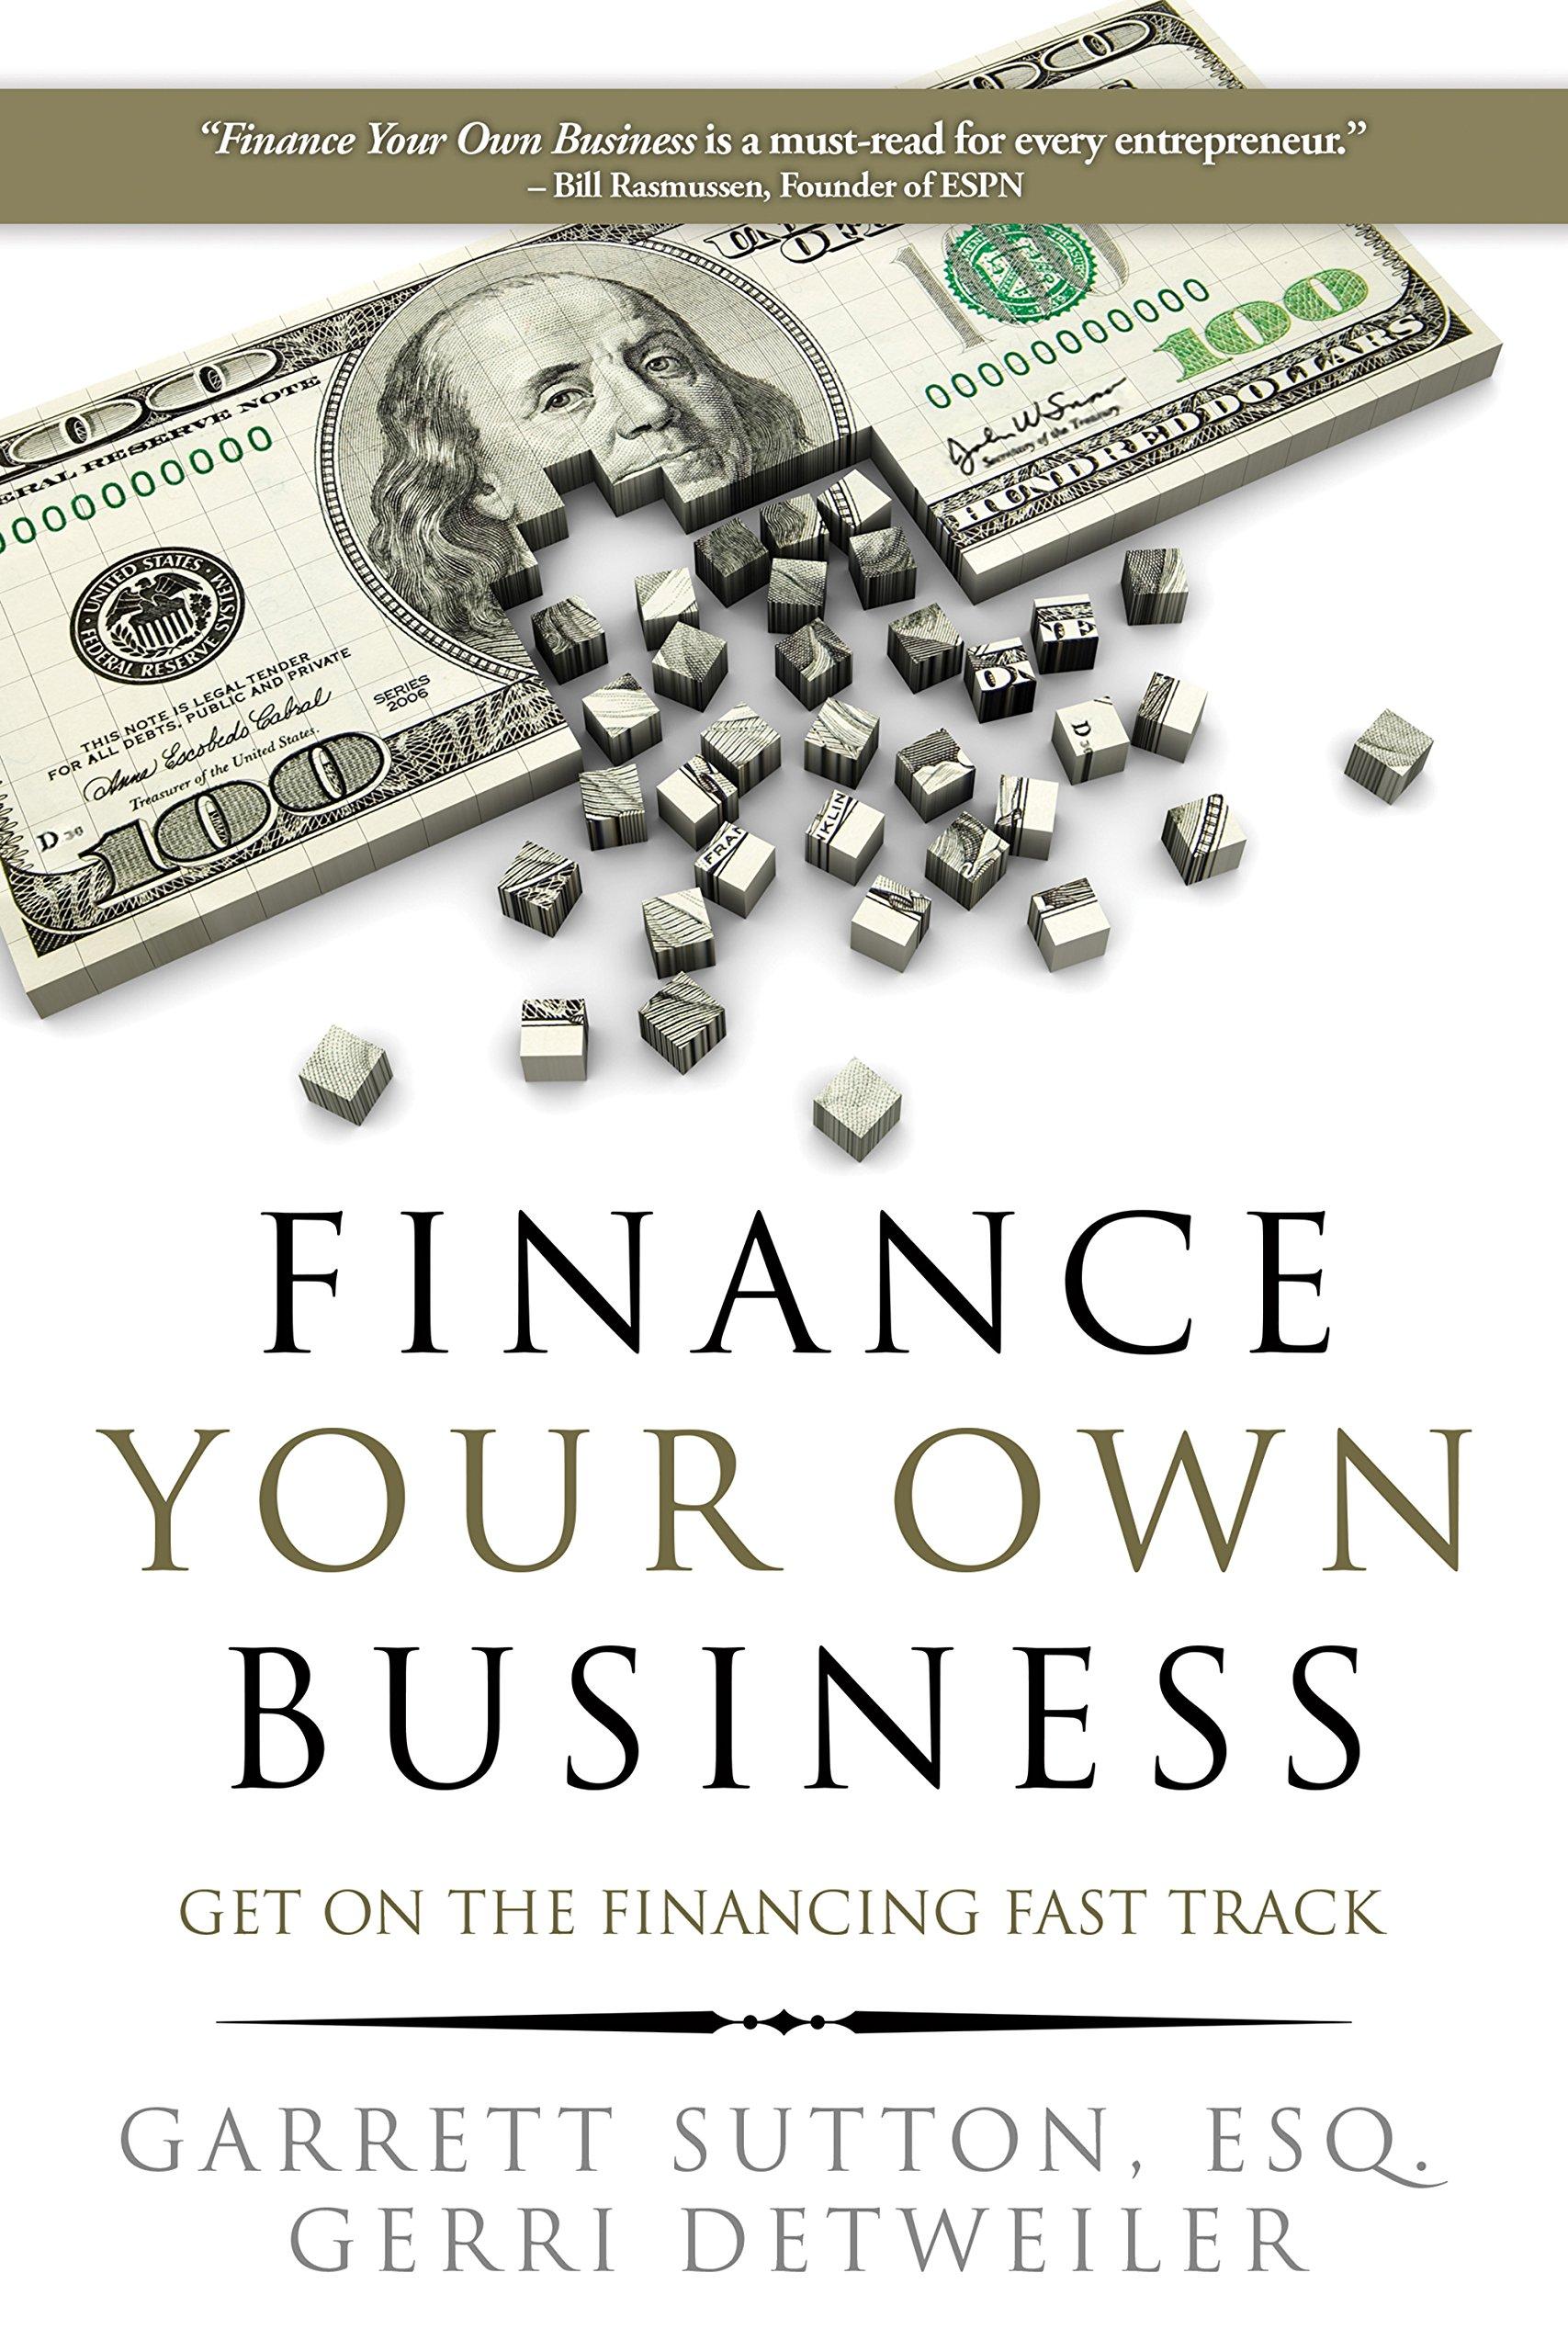 finance your own business get on the financing fast track 1st edition garrett sutton, gerri detweiler